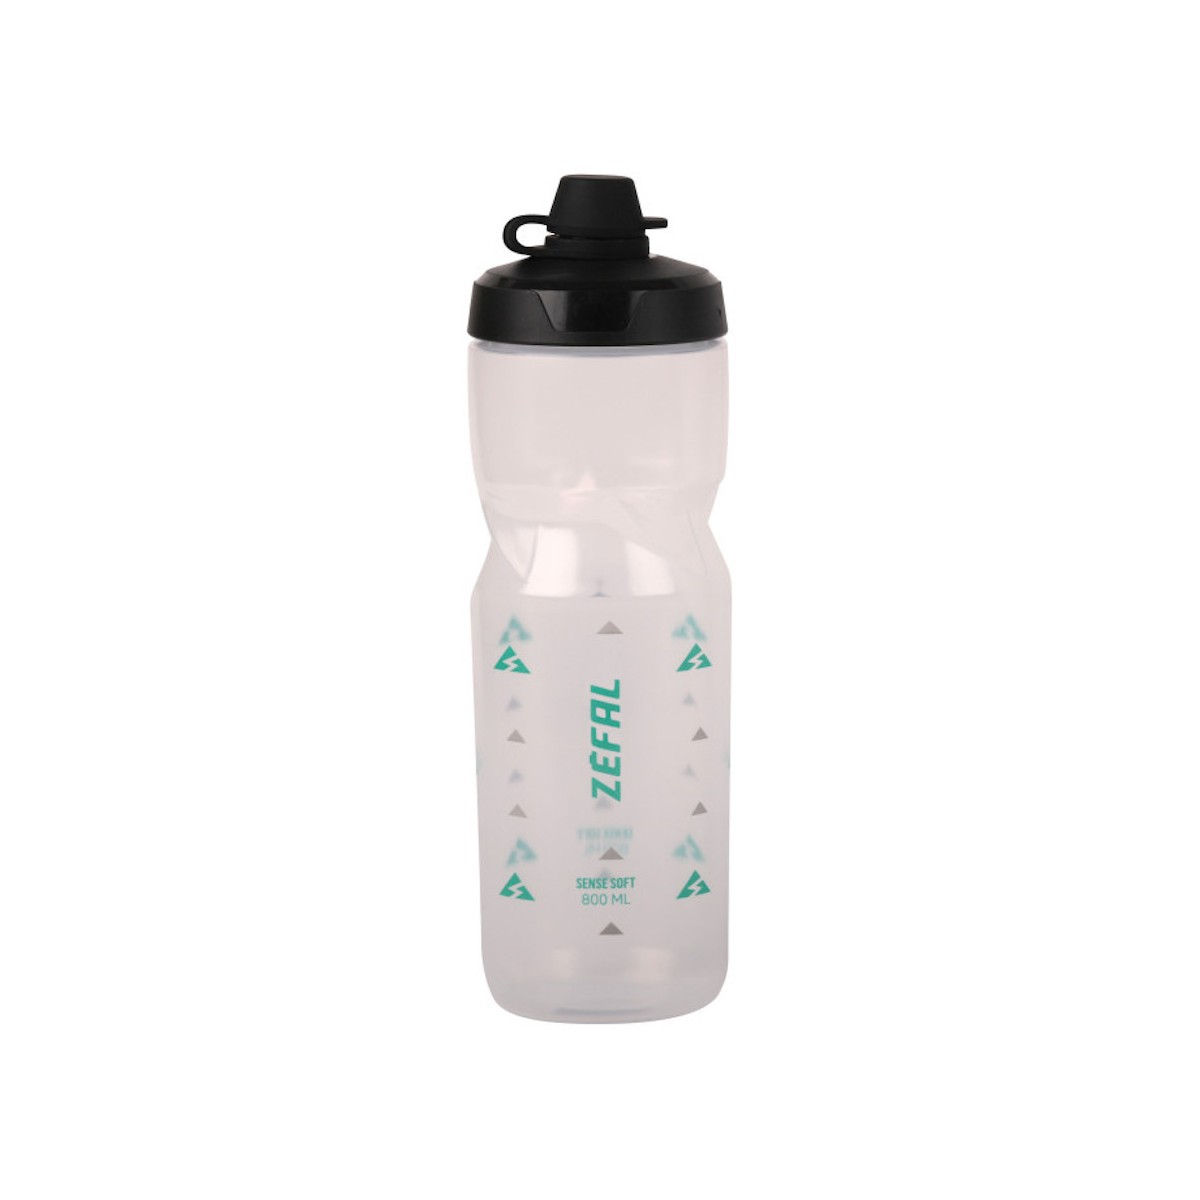 ZEFAL SENSE SOFT 80 NO MUD 800ML water bottle - clear